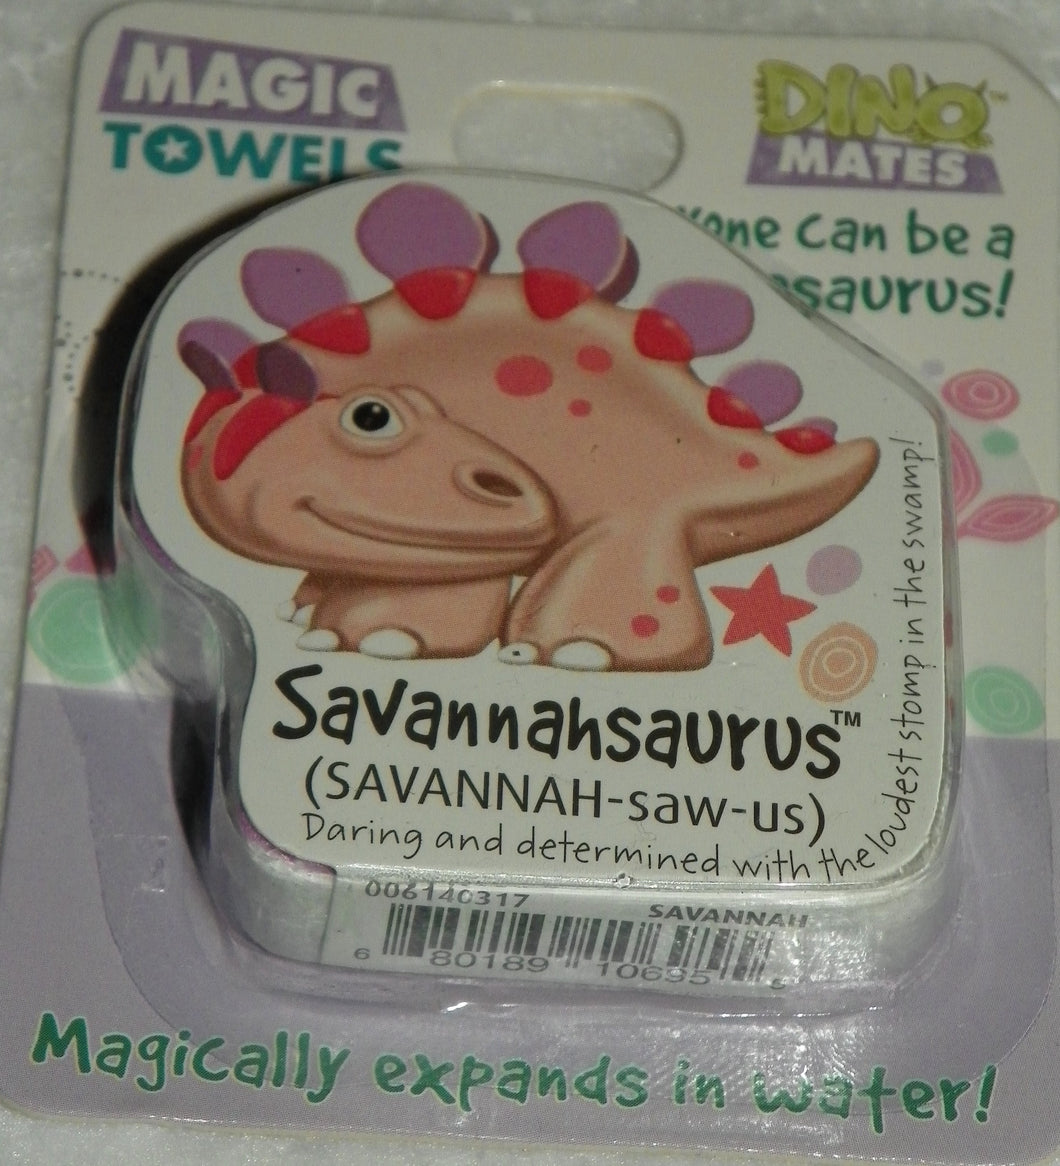 Dinomatic Magic Towel-Savannahsaurus